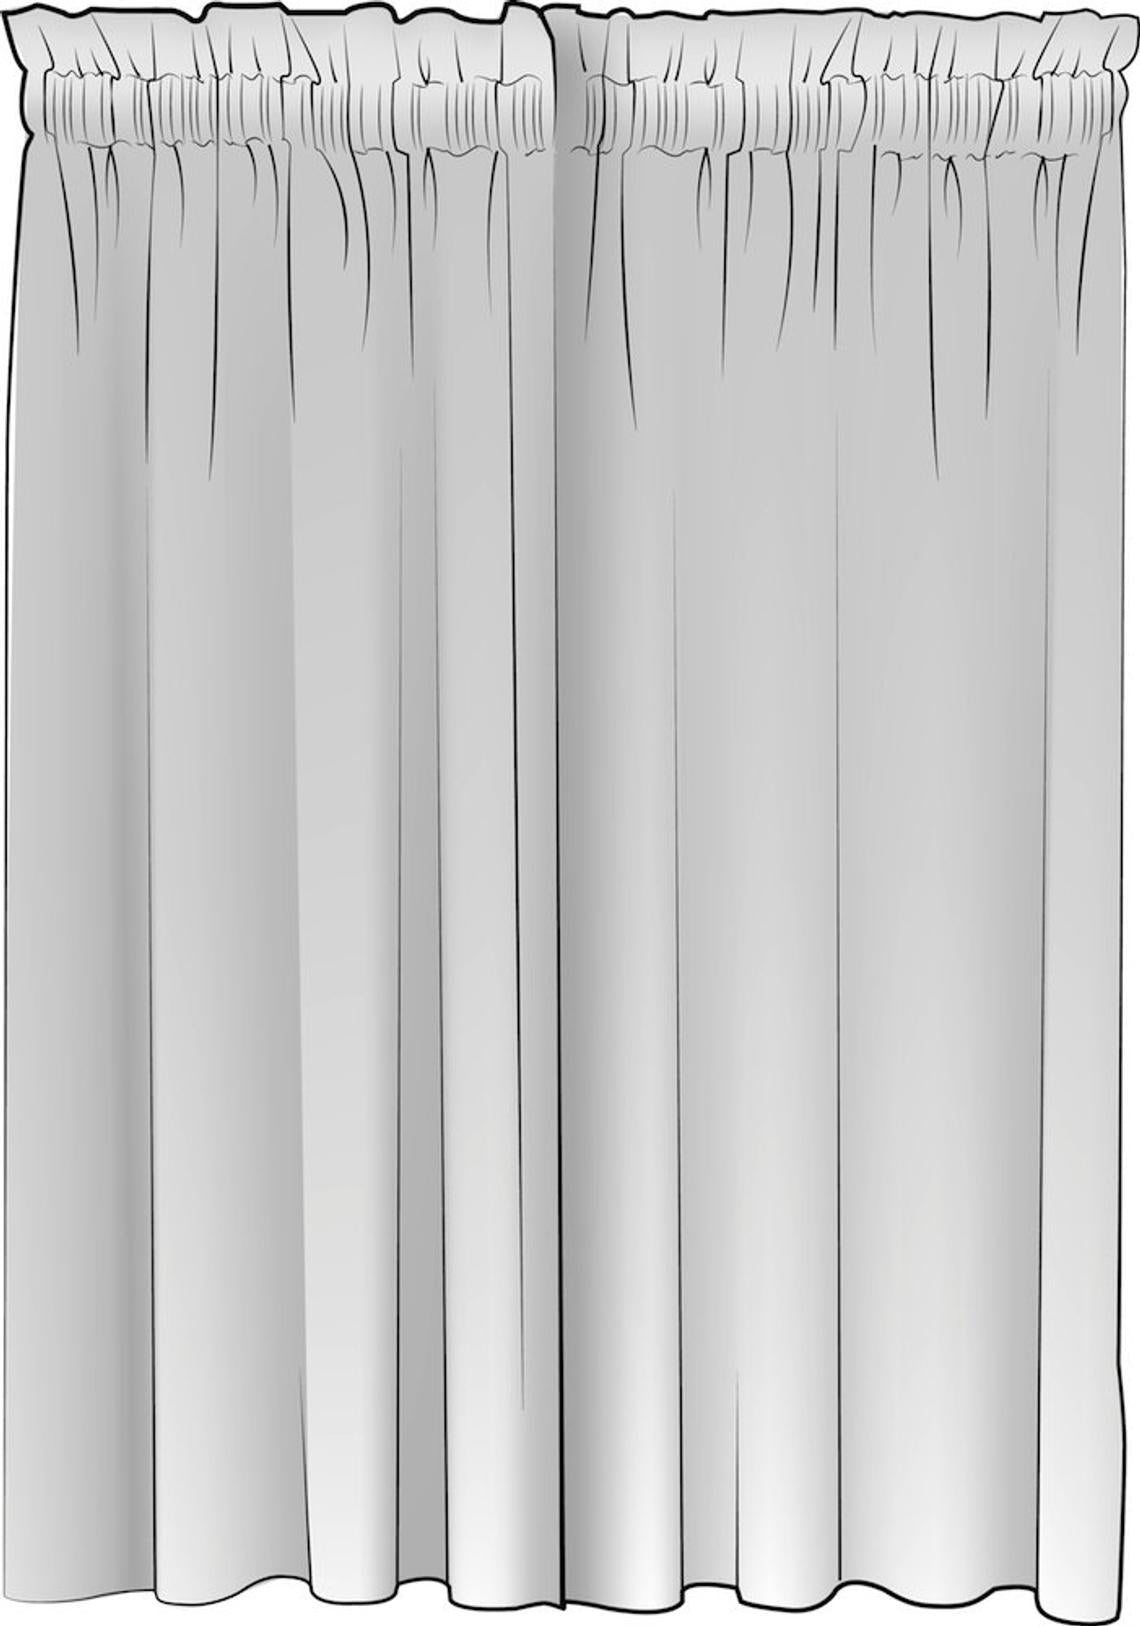 Rod Pocket Curtain Panels Pair in Basketry Linen Beige Basket Weave Matelasse - Small Scale